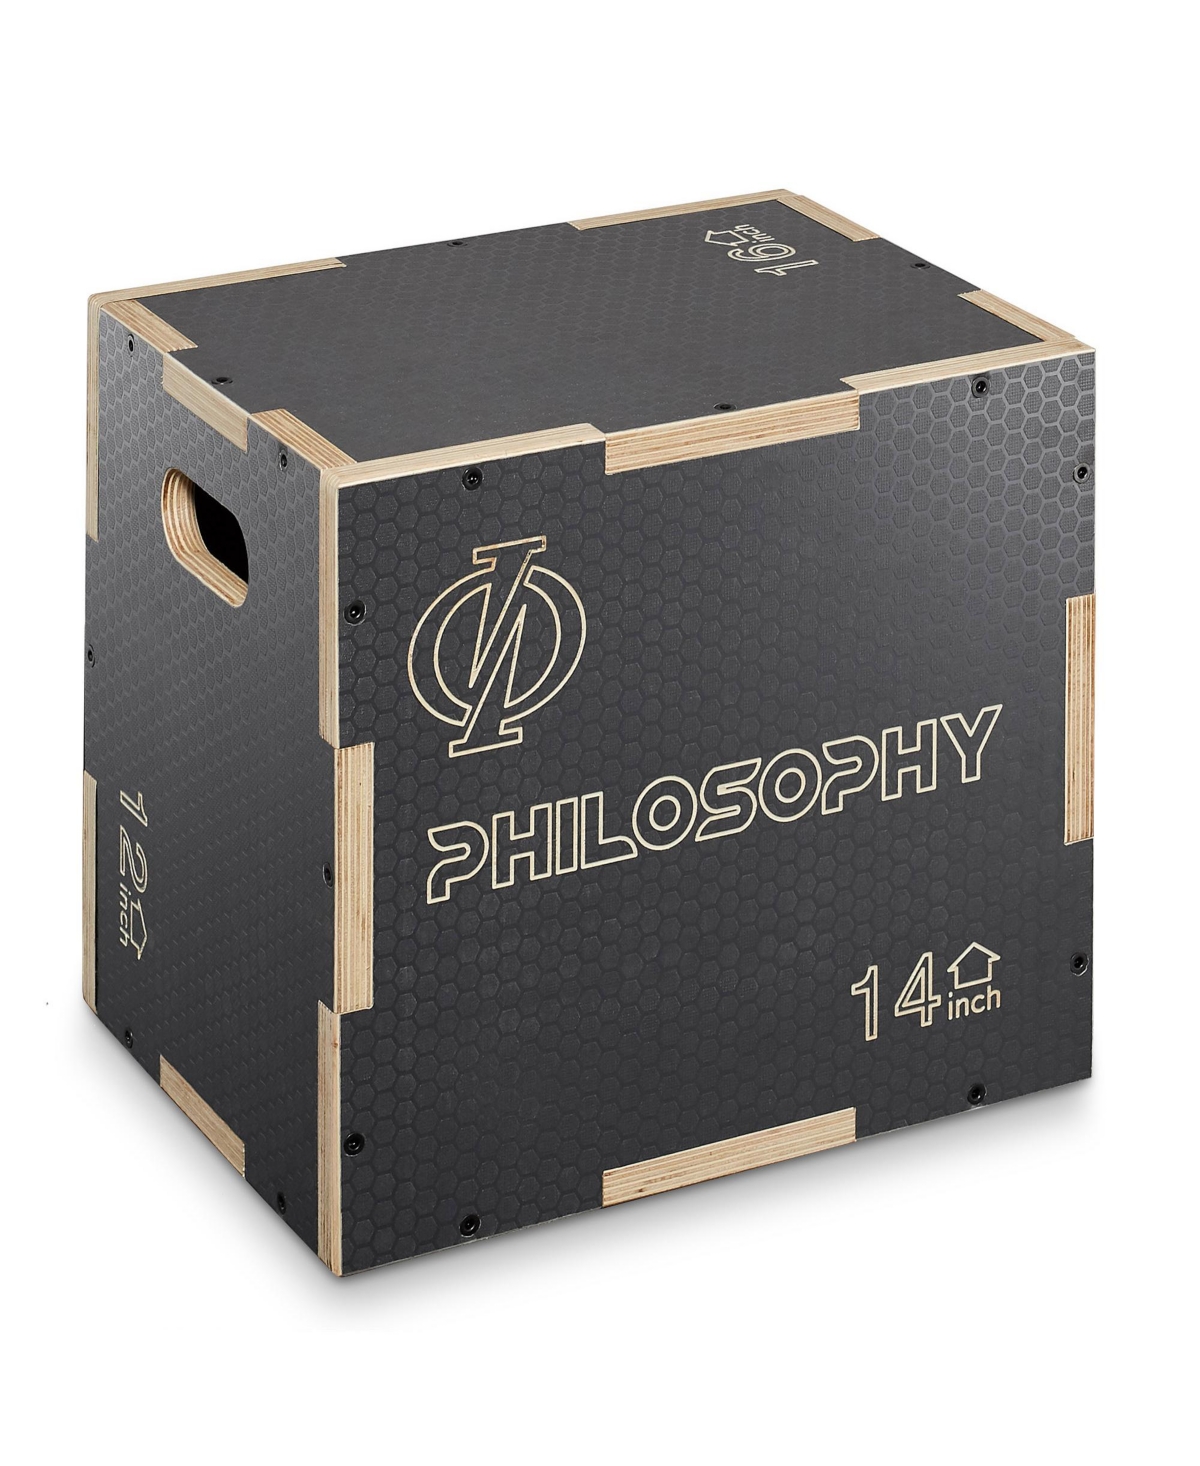 3 in 1 Non-Slip Wood Plyo Box, 16" x 14" x 12", Gray, Jump Plyometric Box for Training and Conditioning - Grey